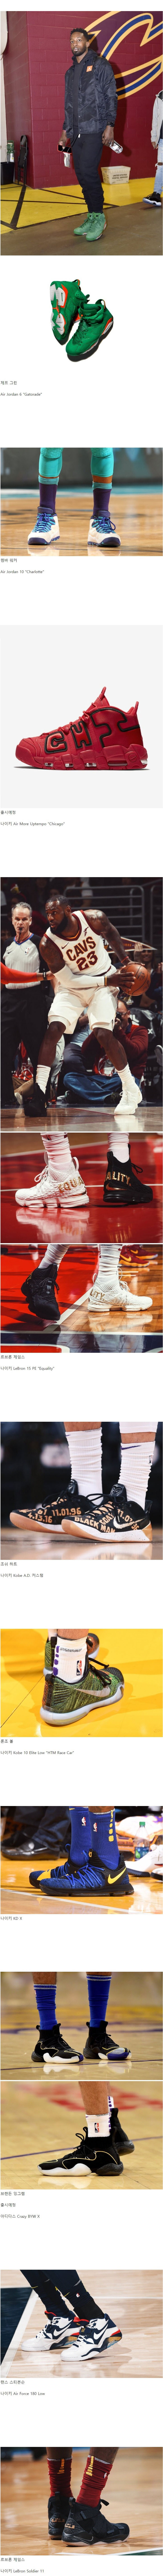 NBA 선수들의 최근 신발